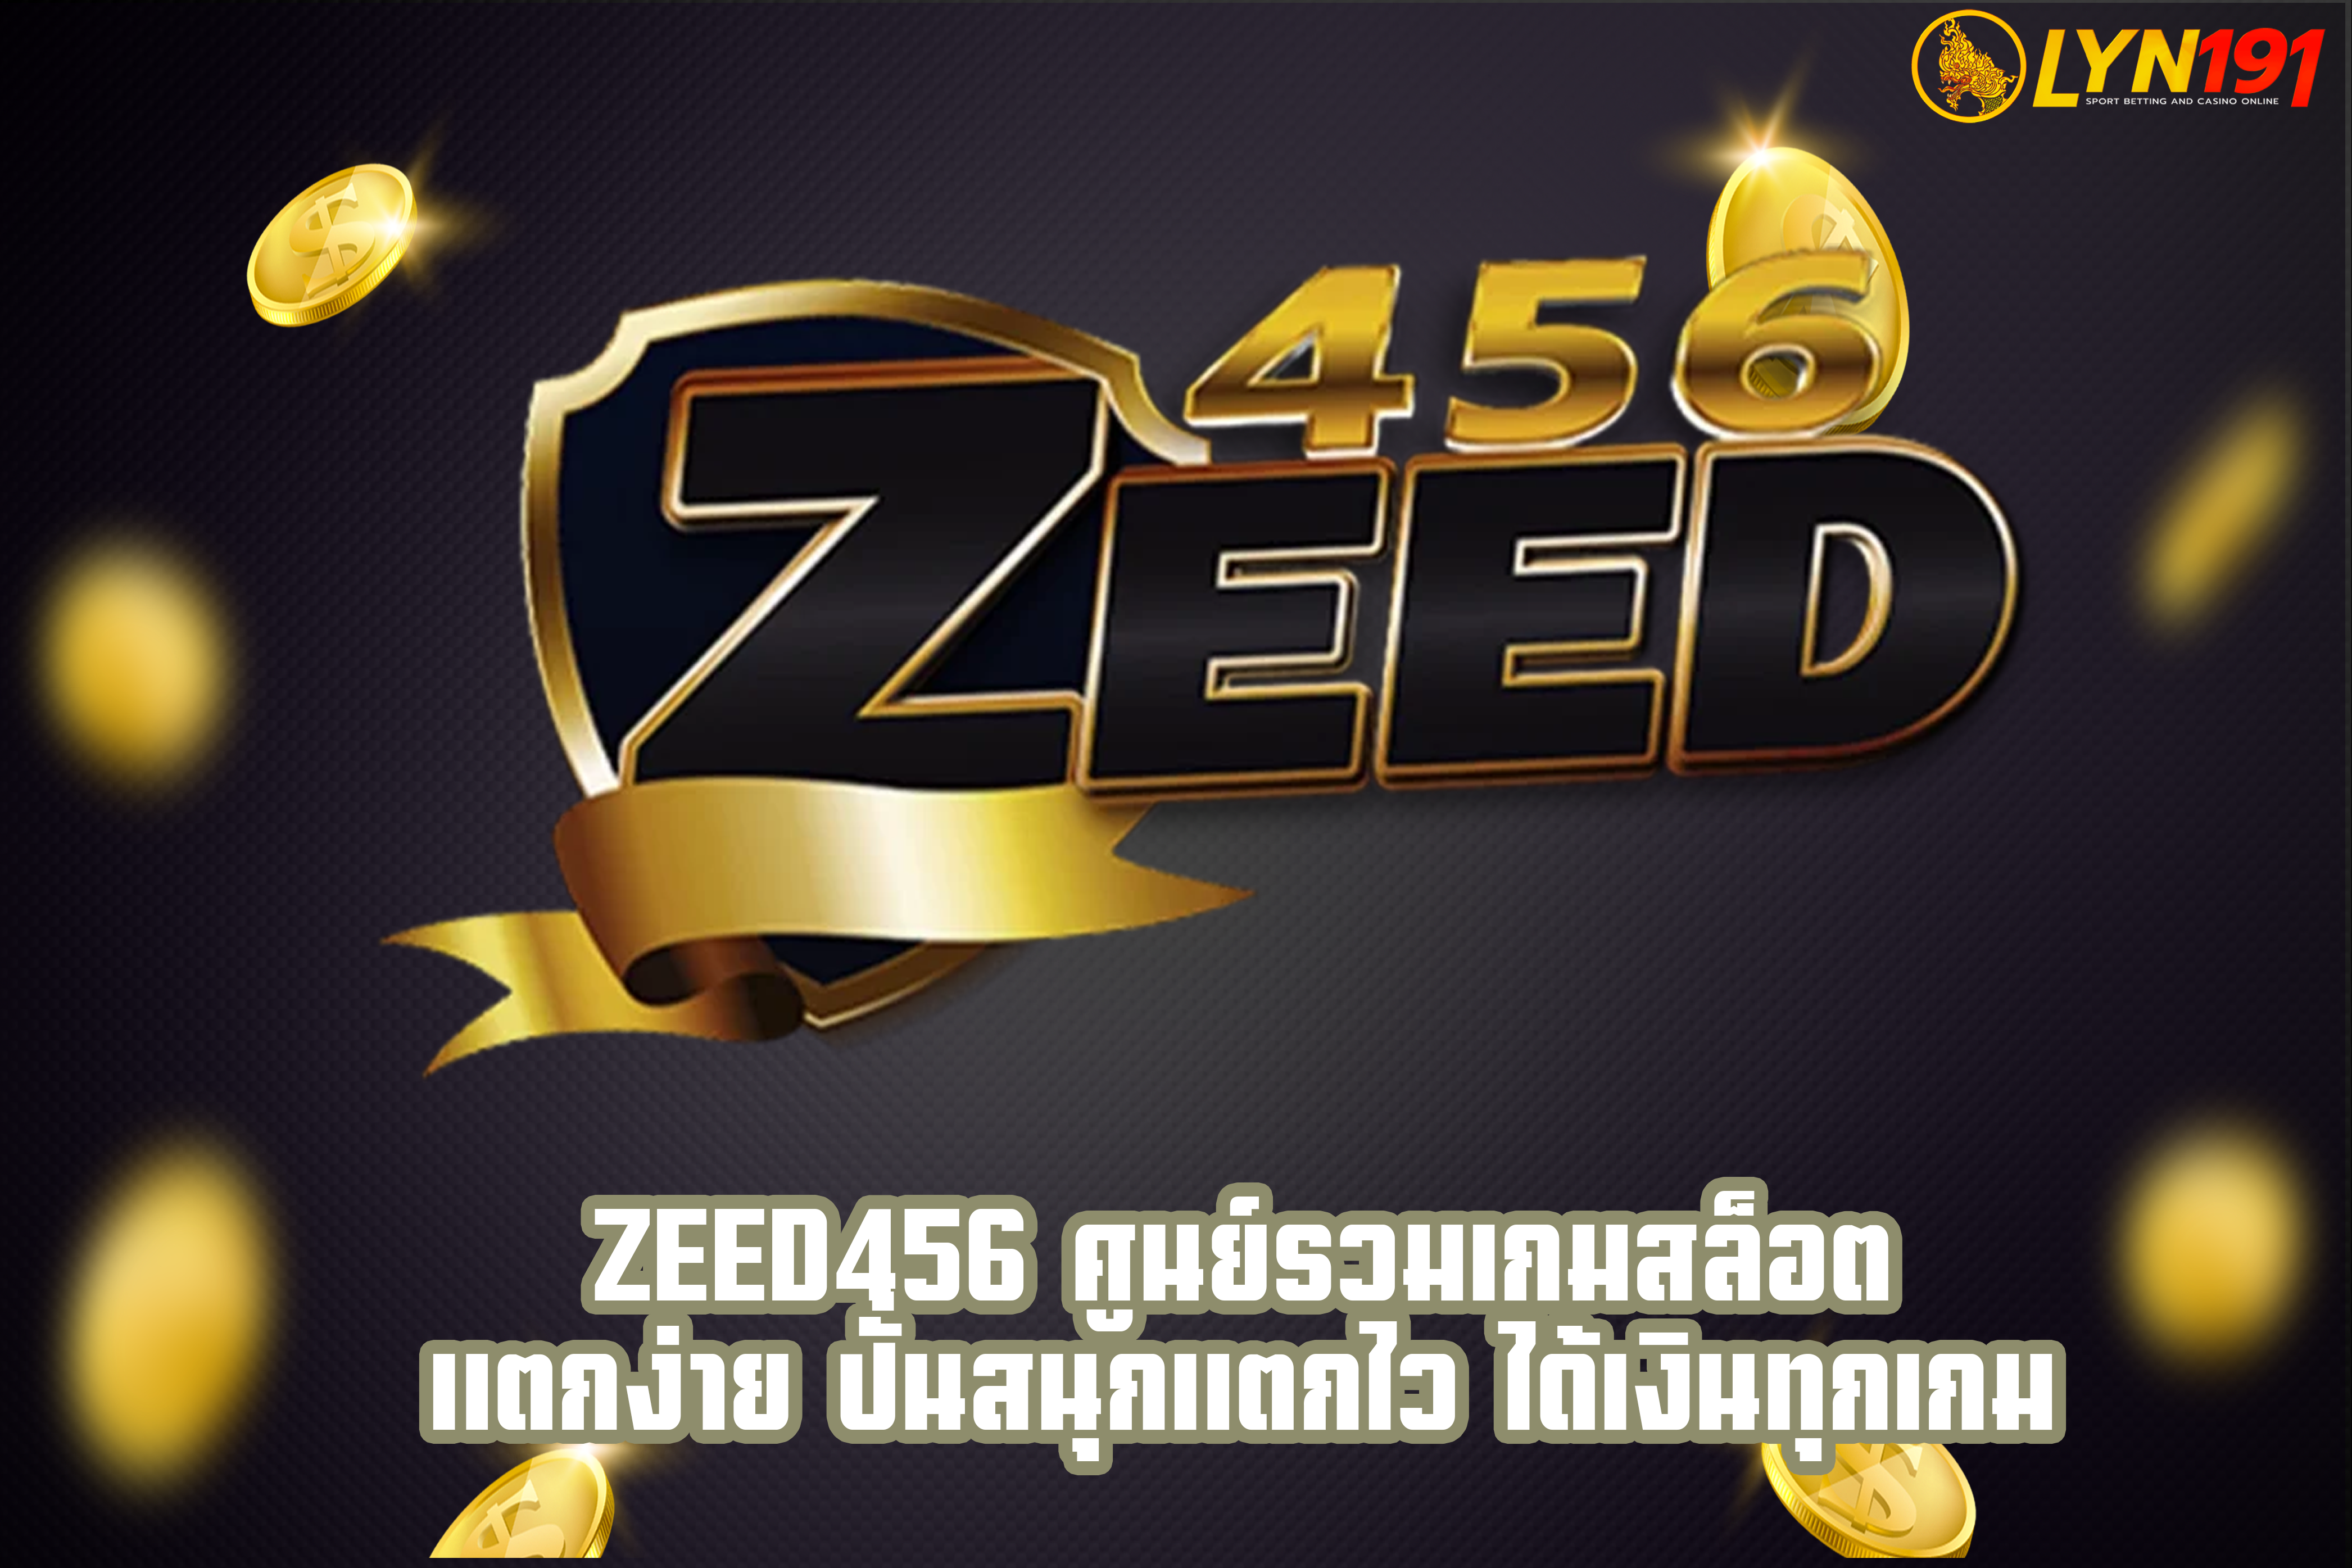 Zeed456 ศูนย์รวมเกมสล็อต แตกง่าย ปั่นสนุกแตกไว ได้เงินทุกเกม